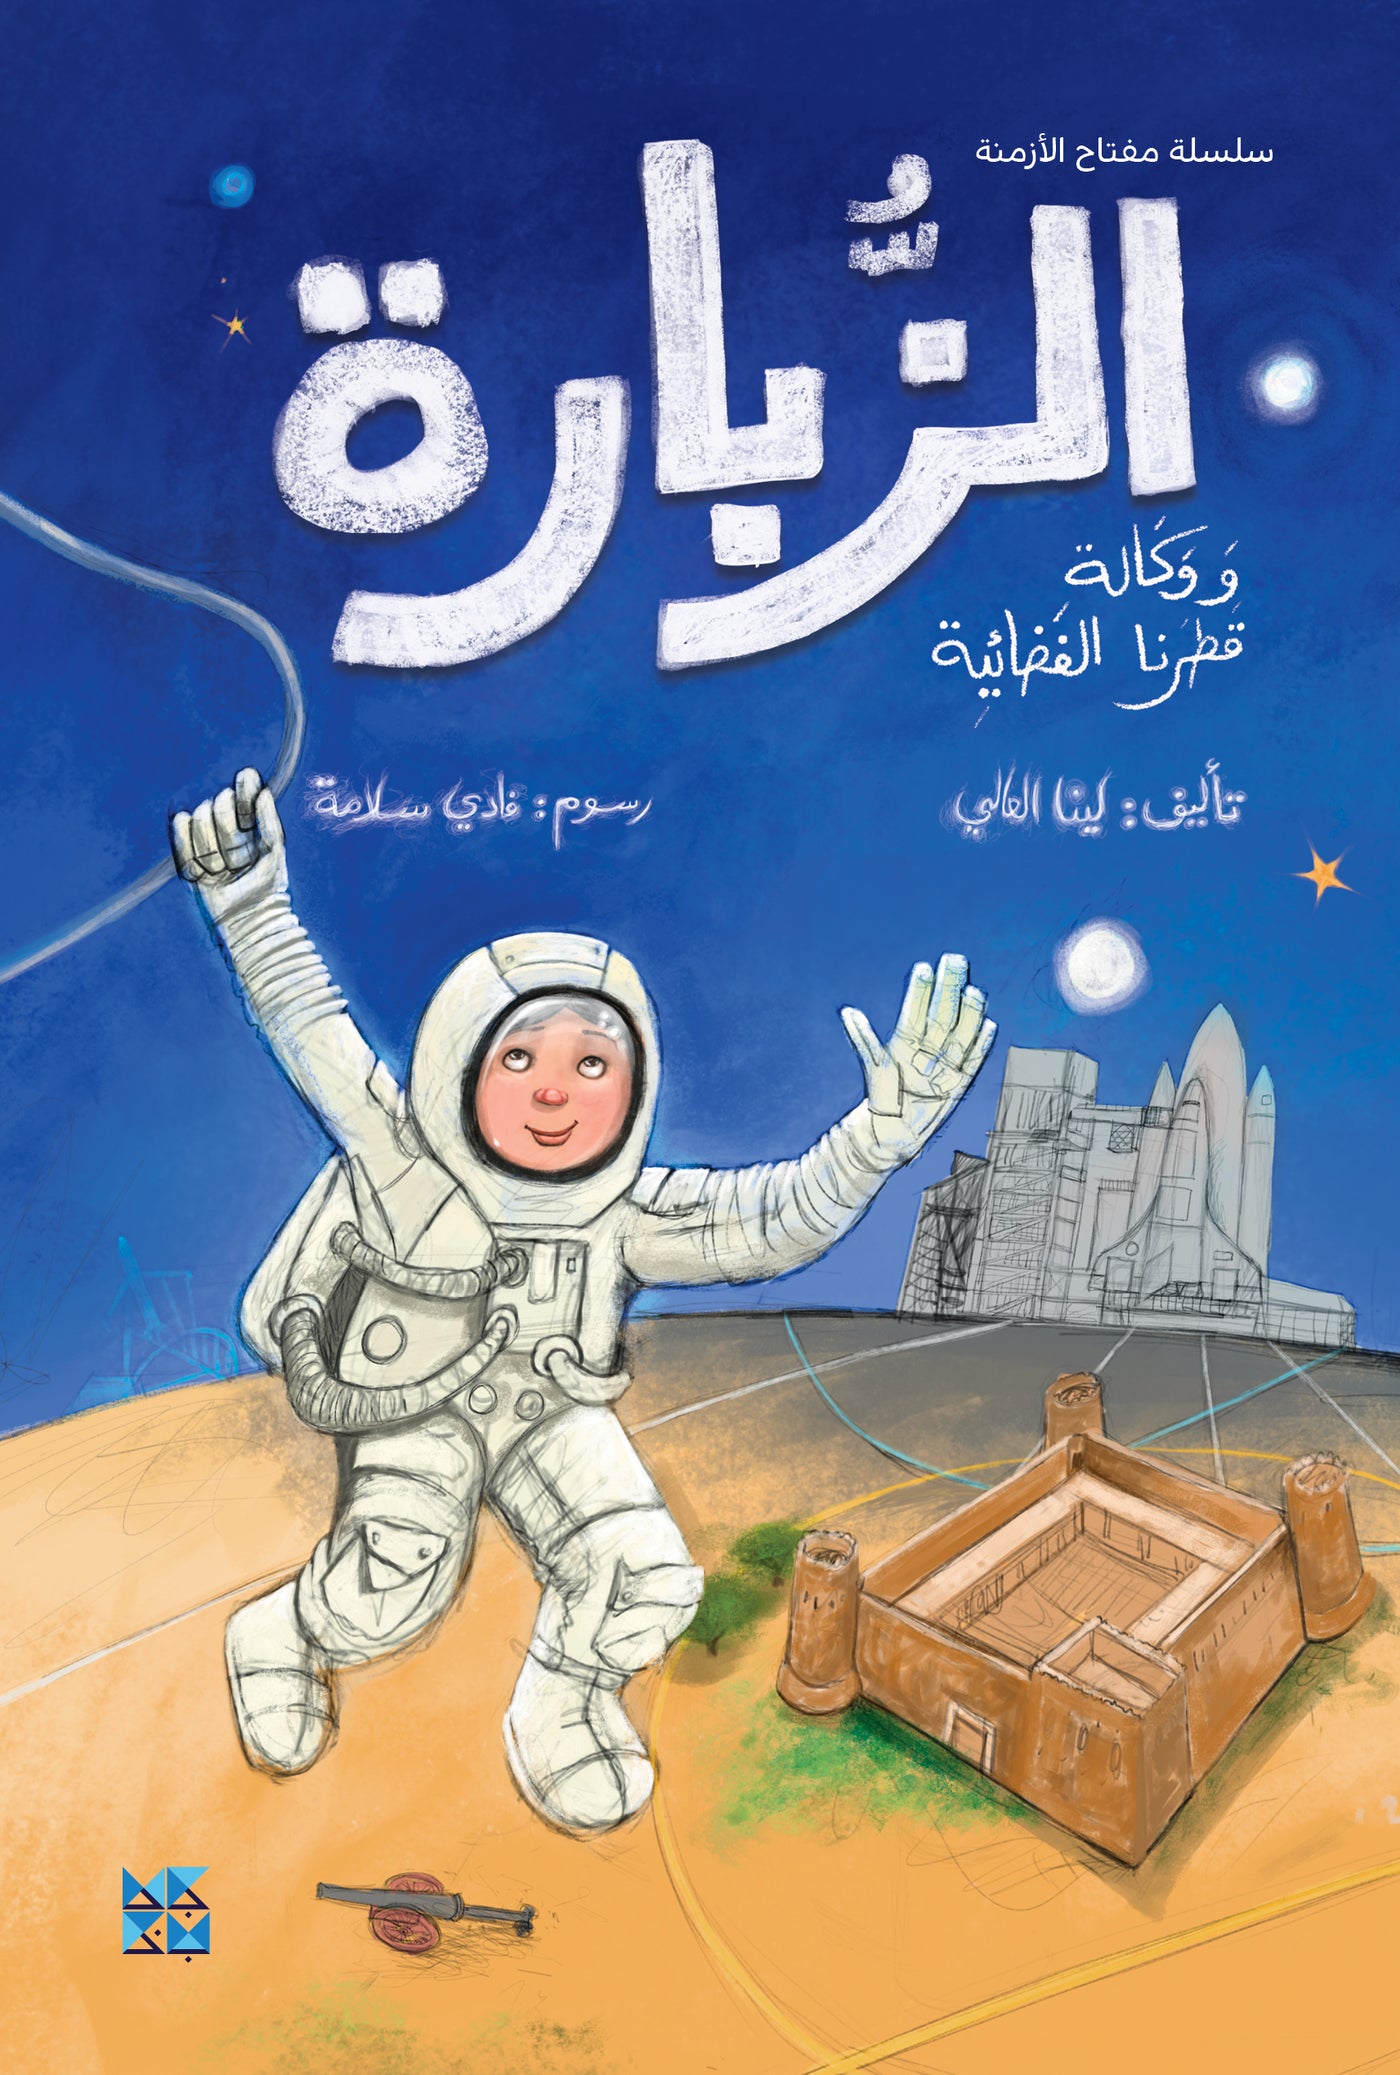 Al-Zubarah Fort Book Cover